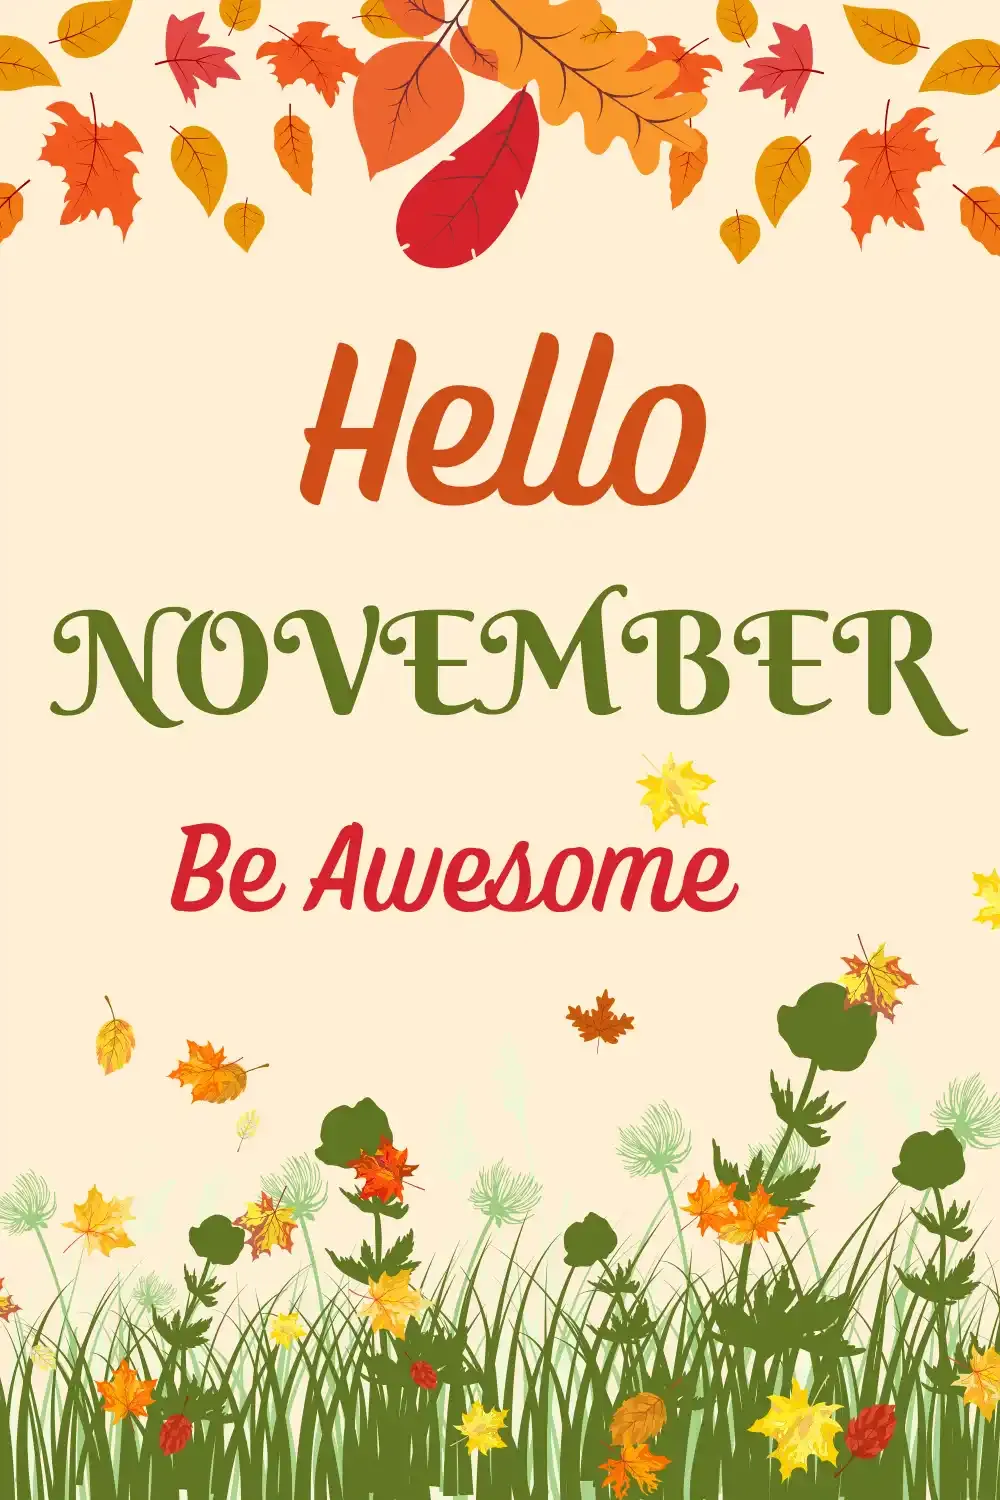 hello november be awesome image